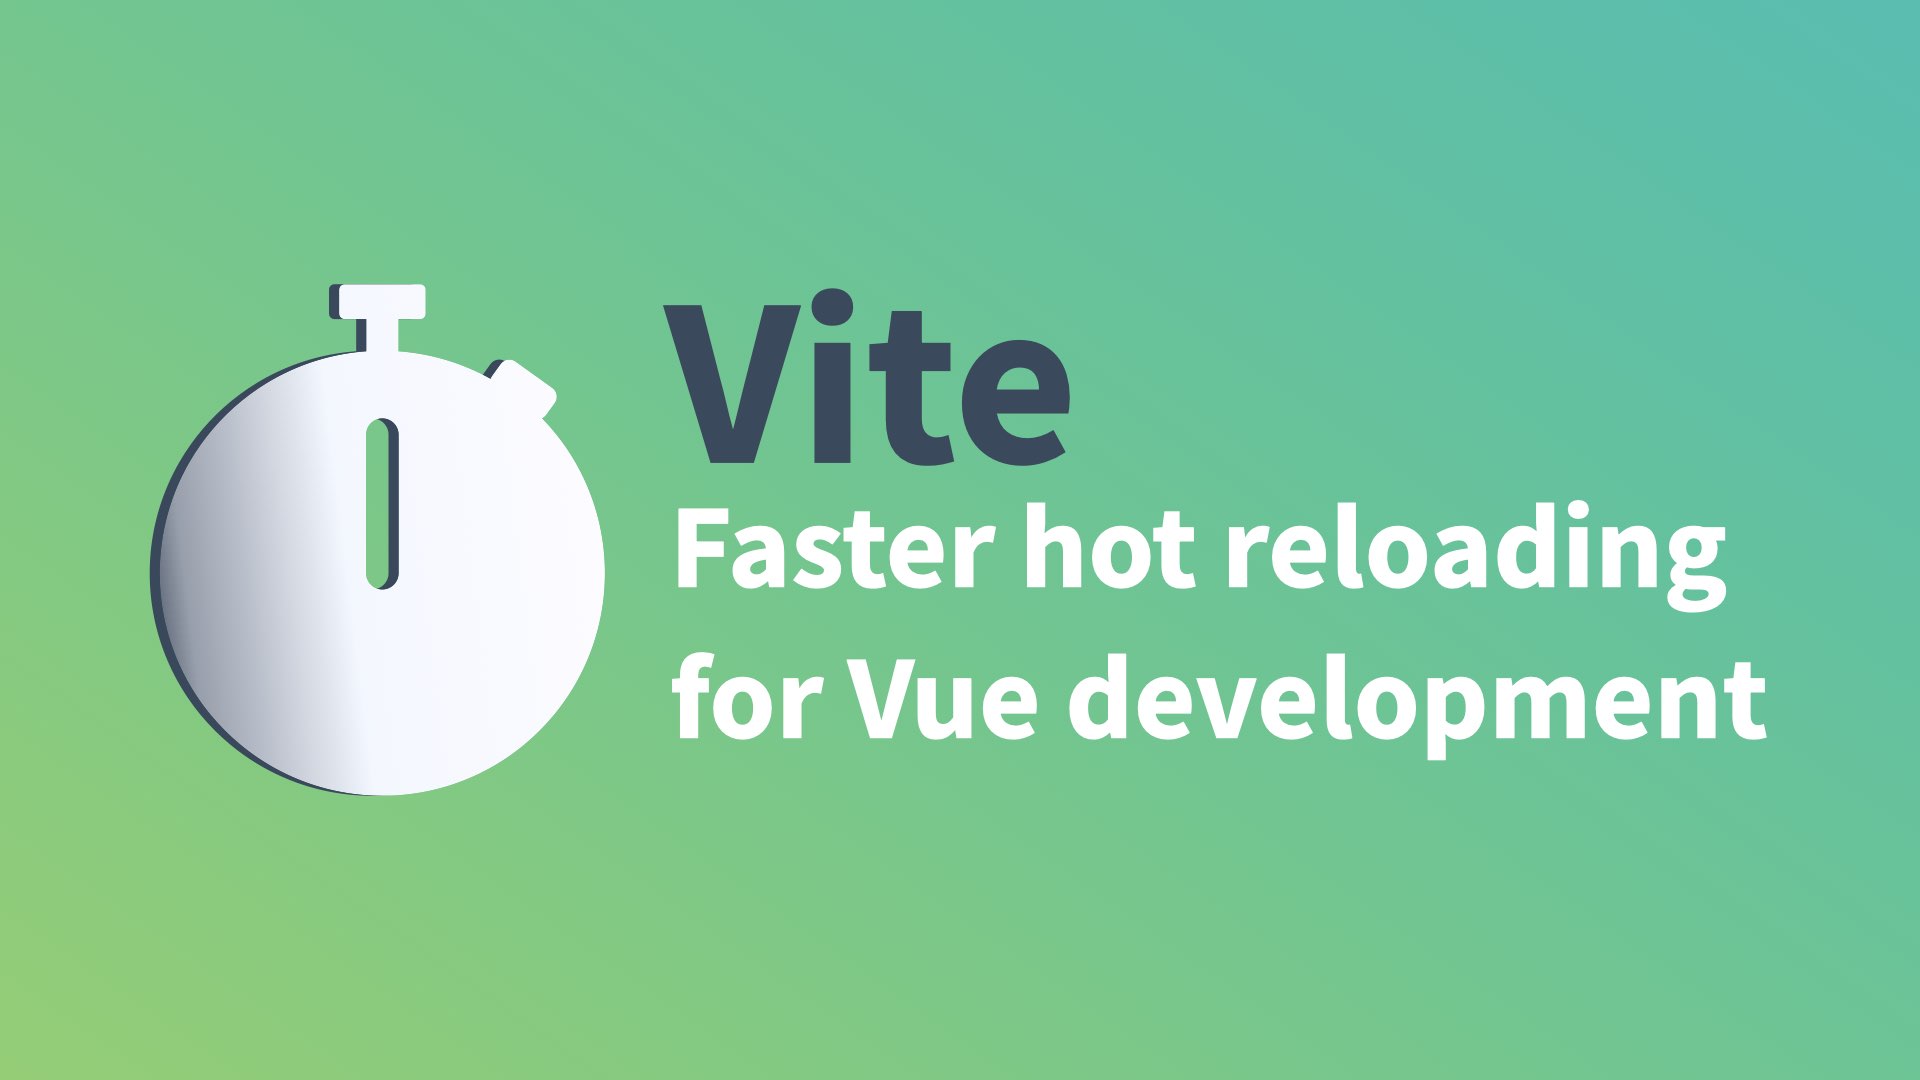 Faster hot reloading for Vue development with Vite